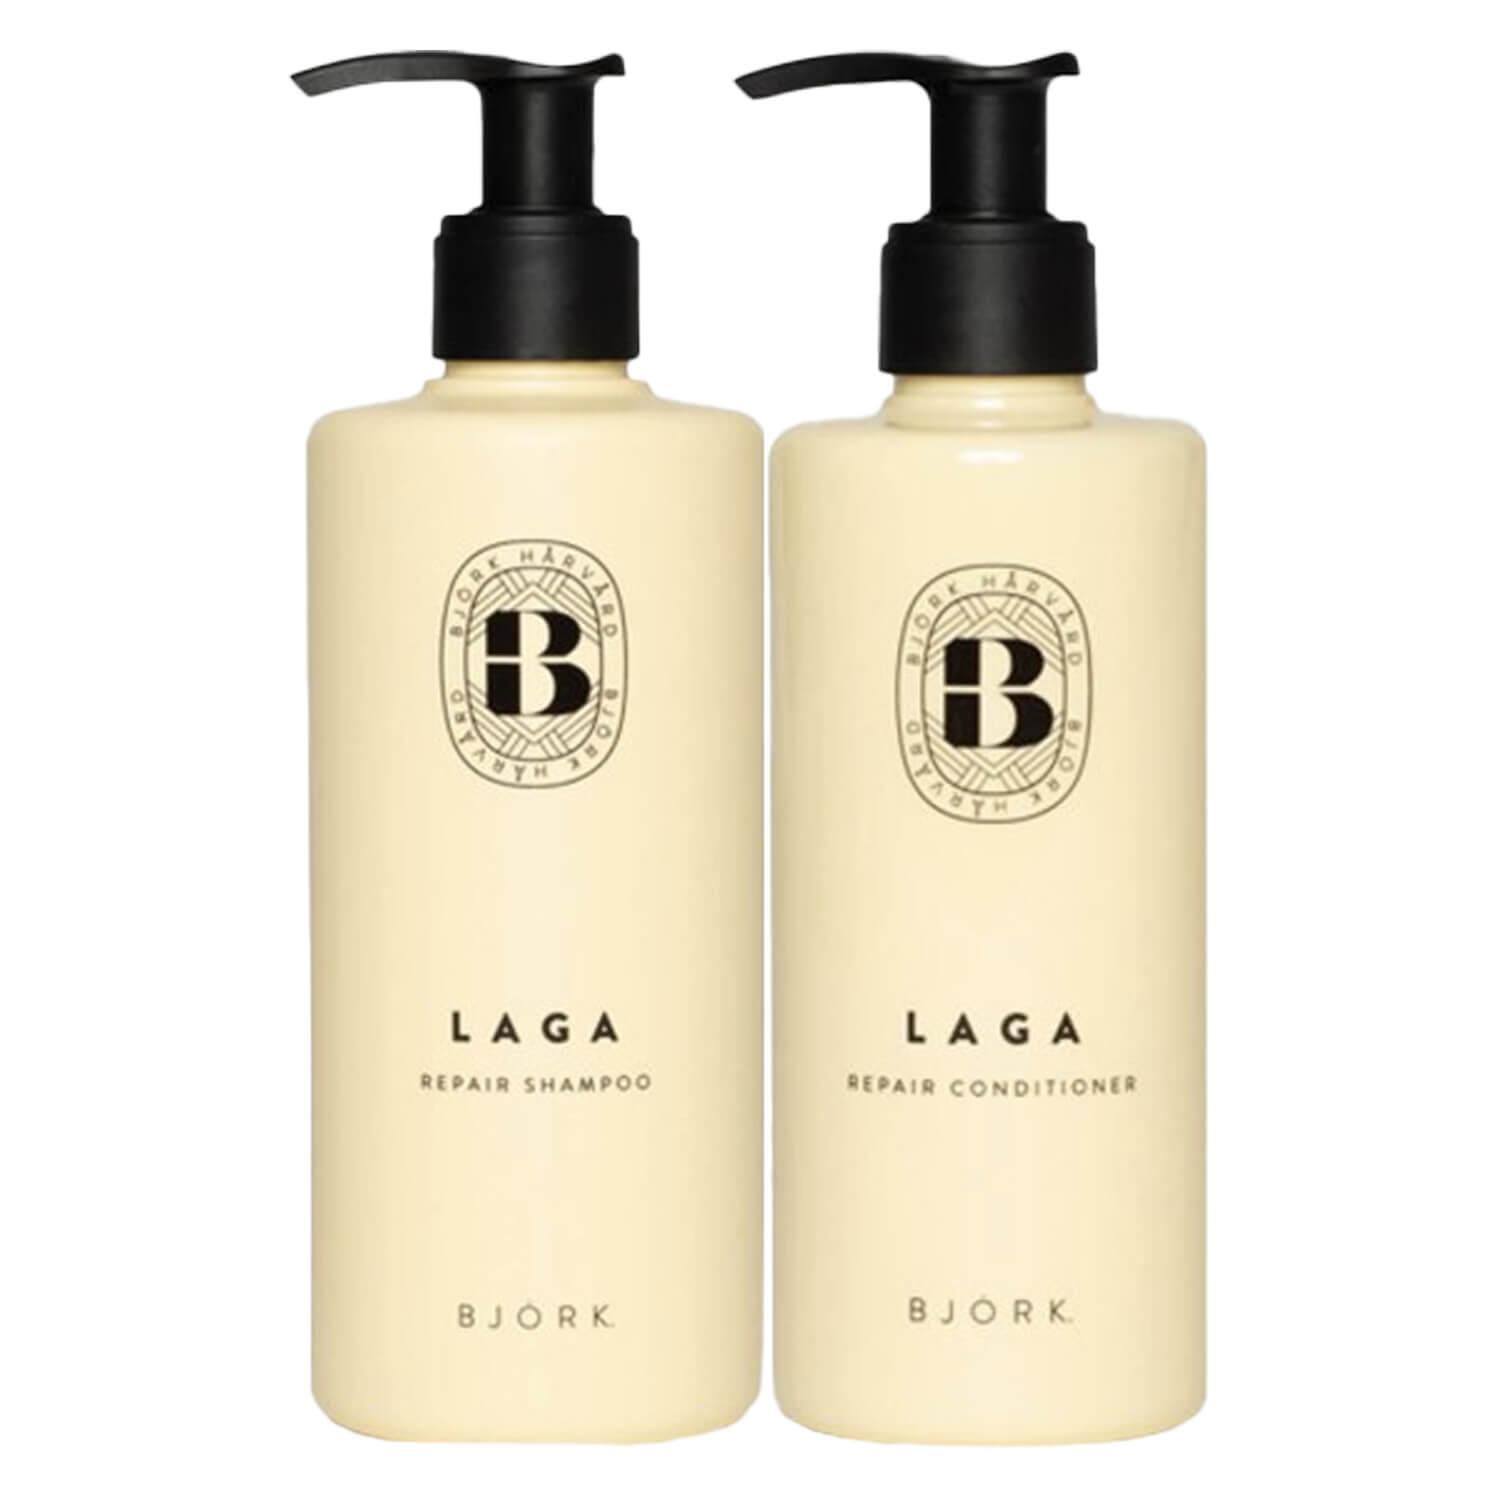 BJÖRK - Laga Shampoo & Conditioner Duo